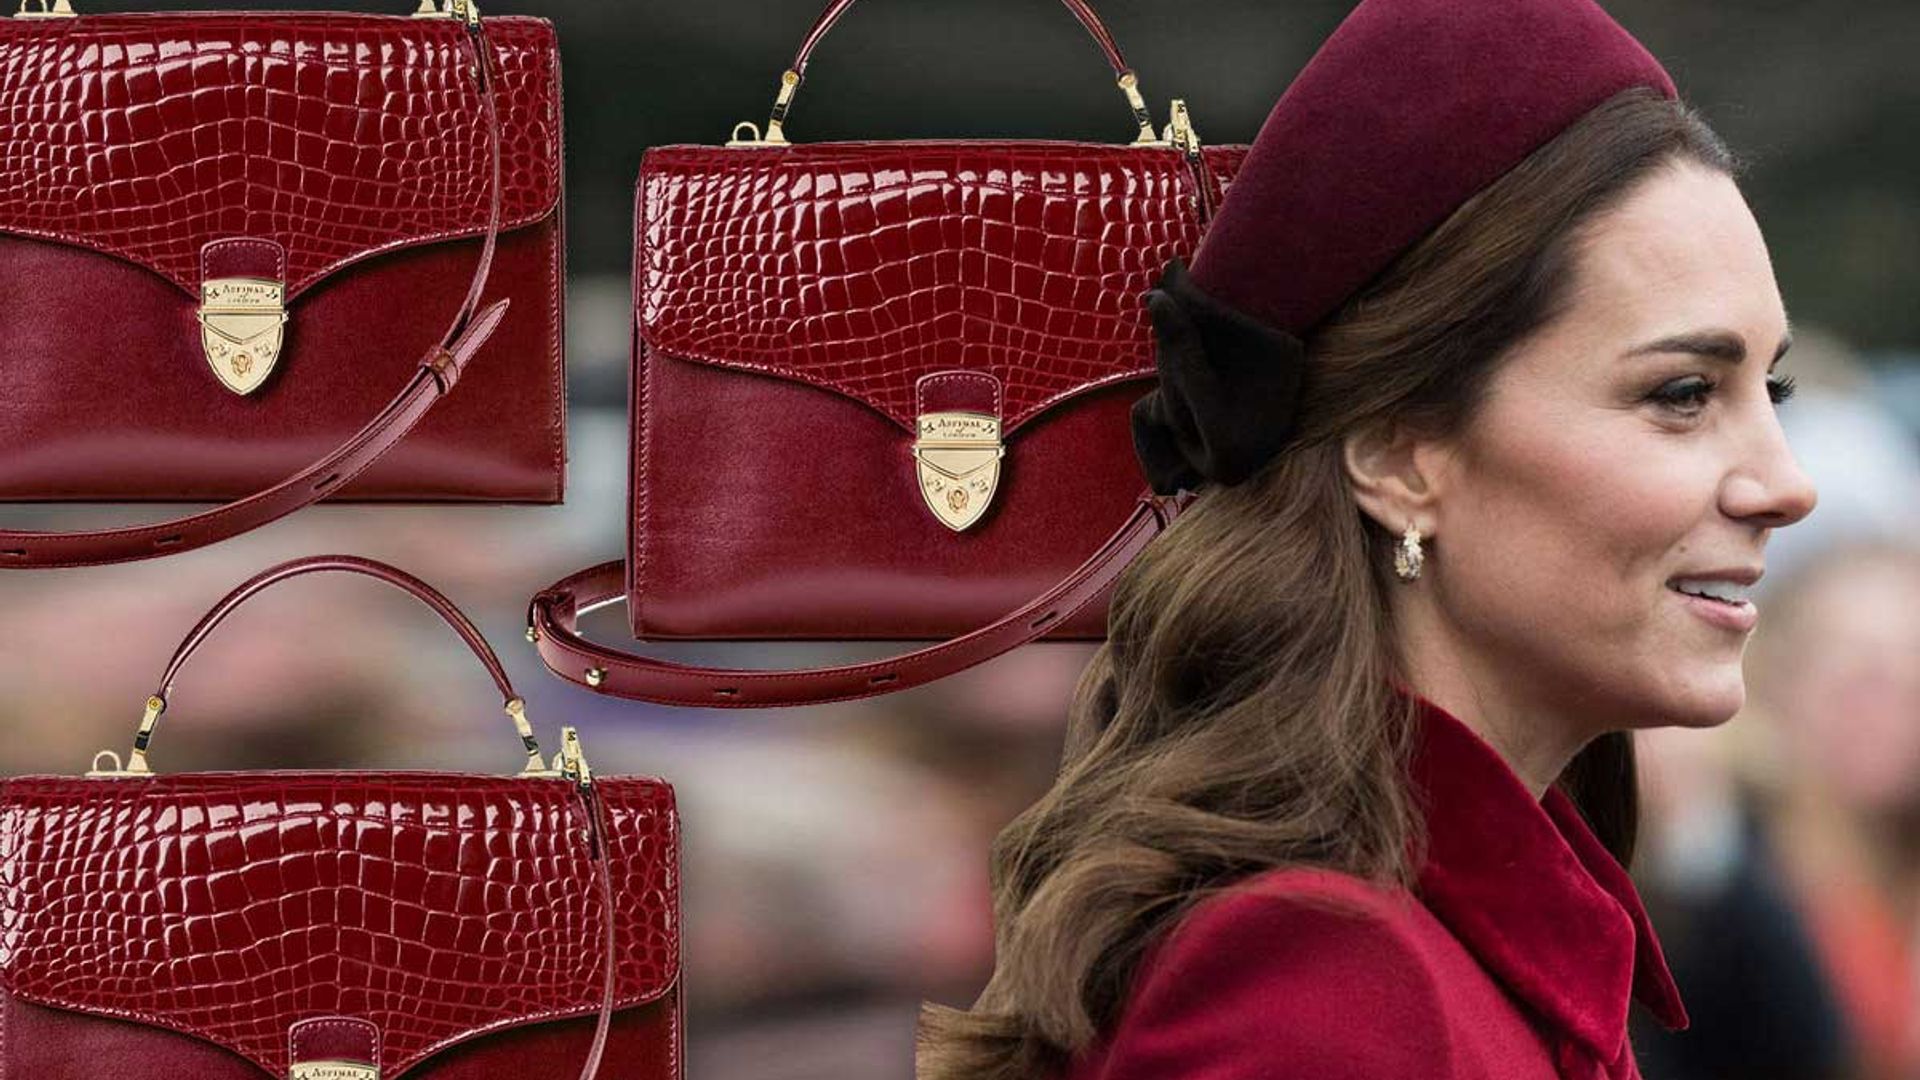 Women's Kate spade new york Sale Handbags & Wallets | Nordstrom